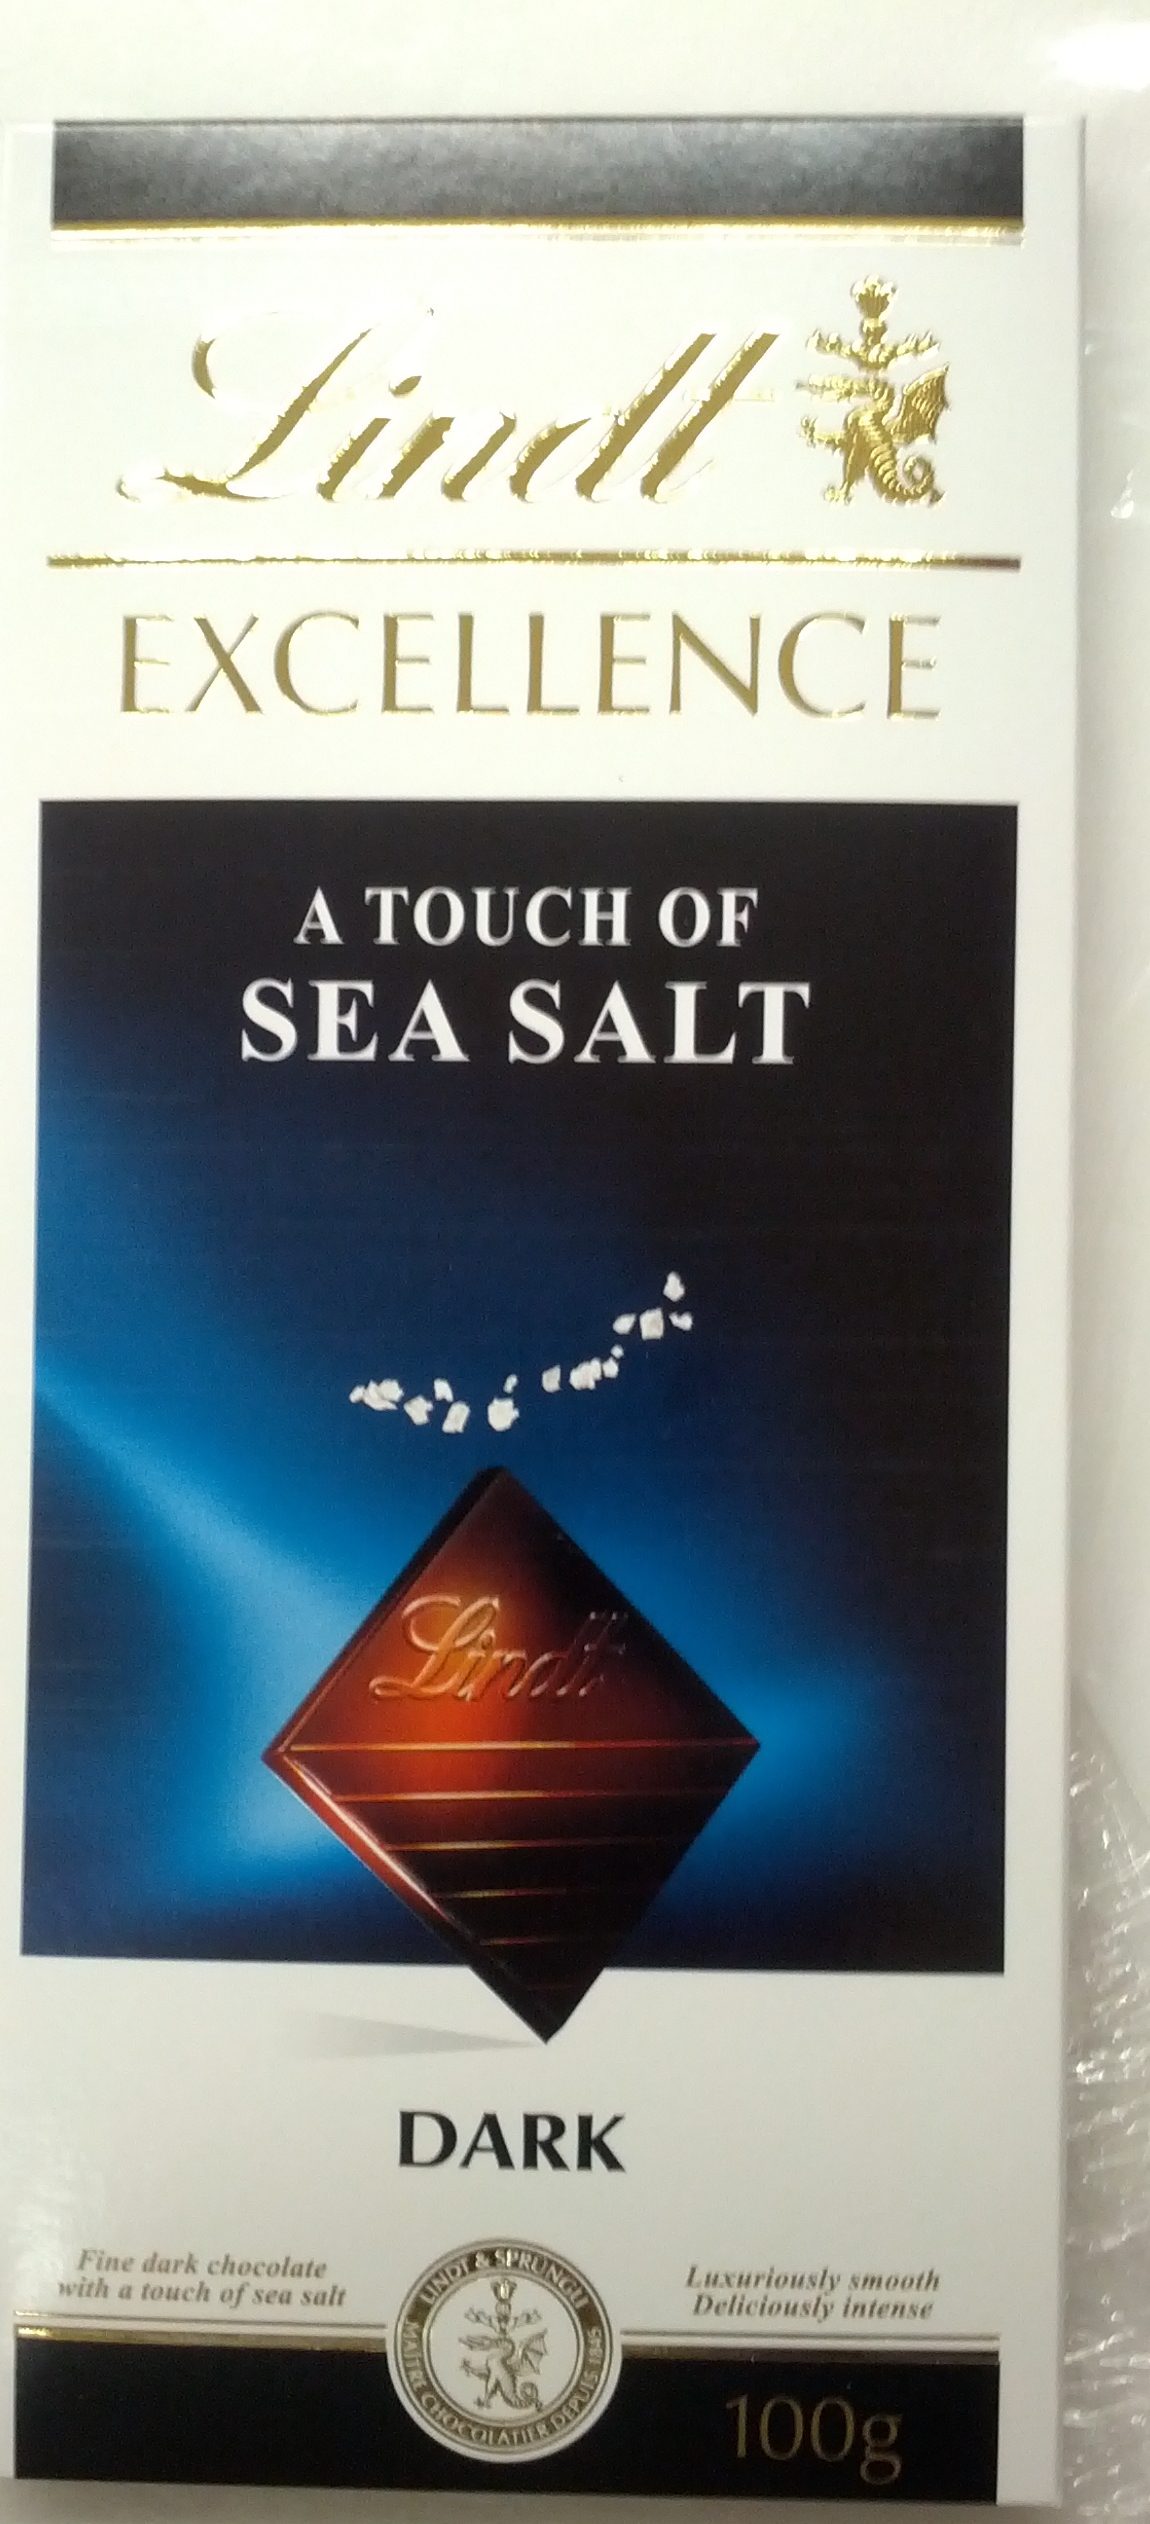 Lindt excellence - a touch of sea salt Dark - Produkt - en